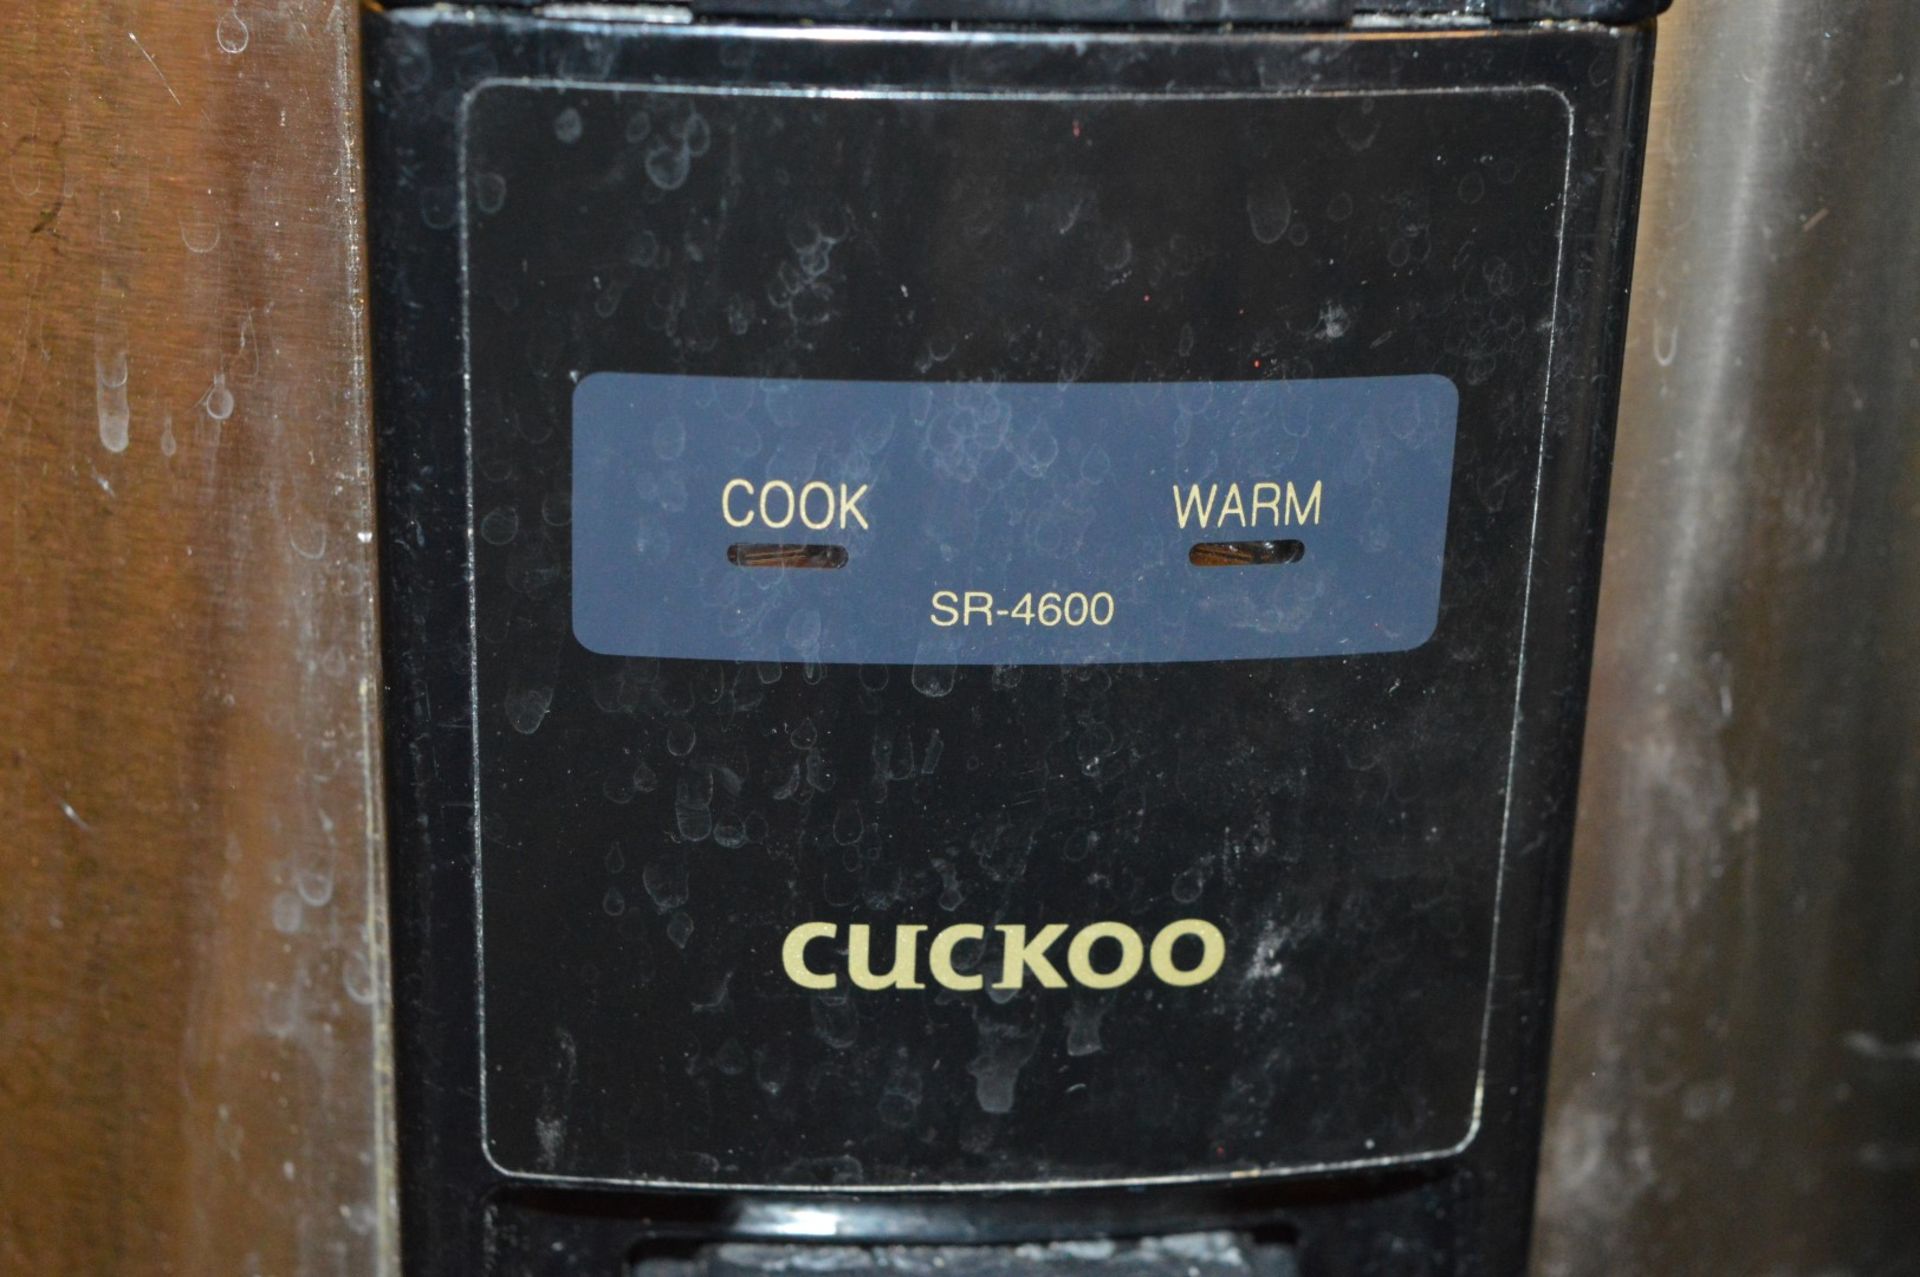 1 x Cuckoo SR-46000 4.6l Rice Cooker - CL180 - 240v - Ref IC246 - Location: London EC3V - Image 2 of 3